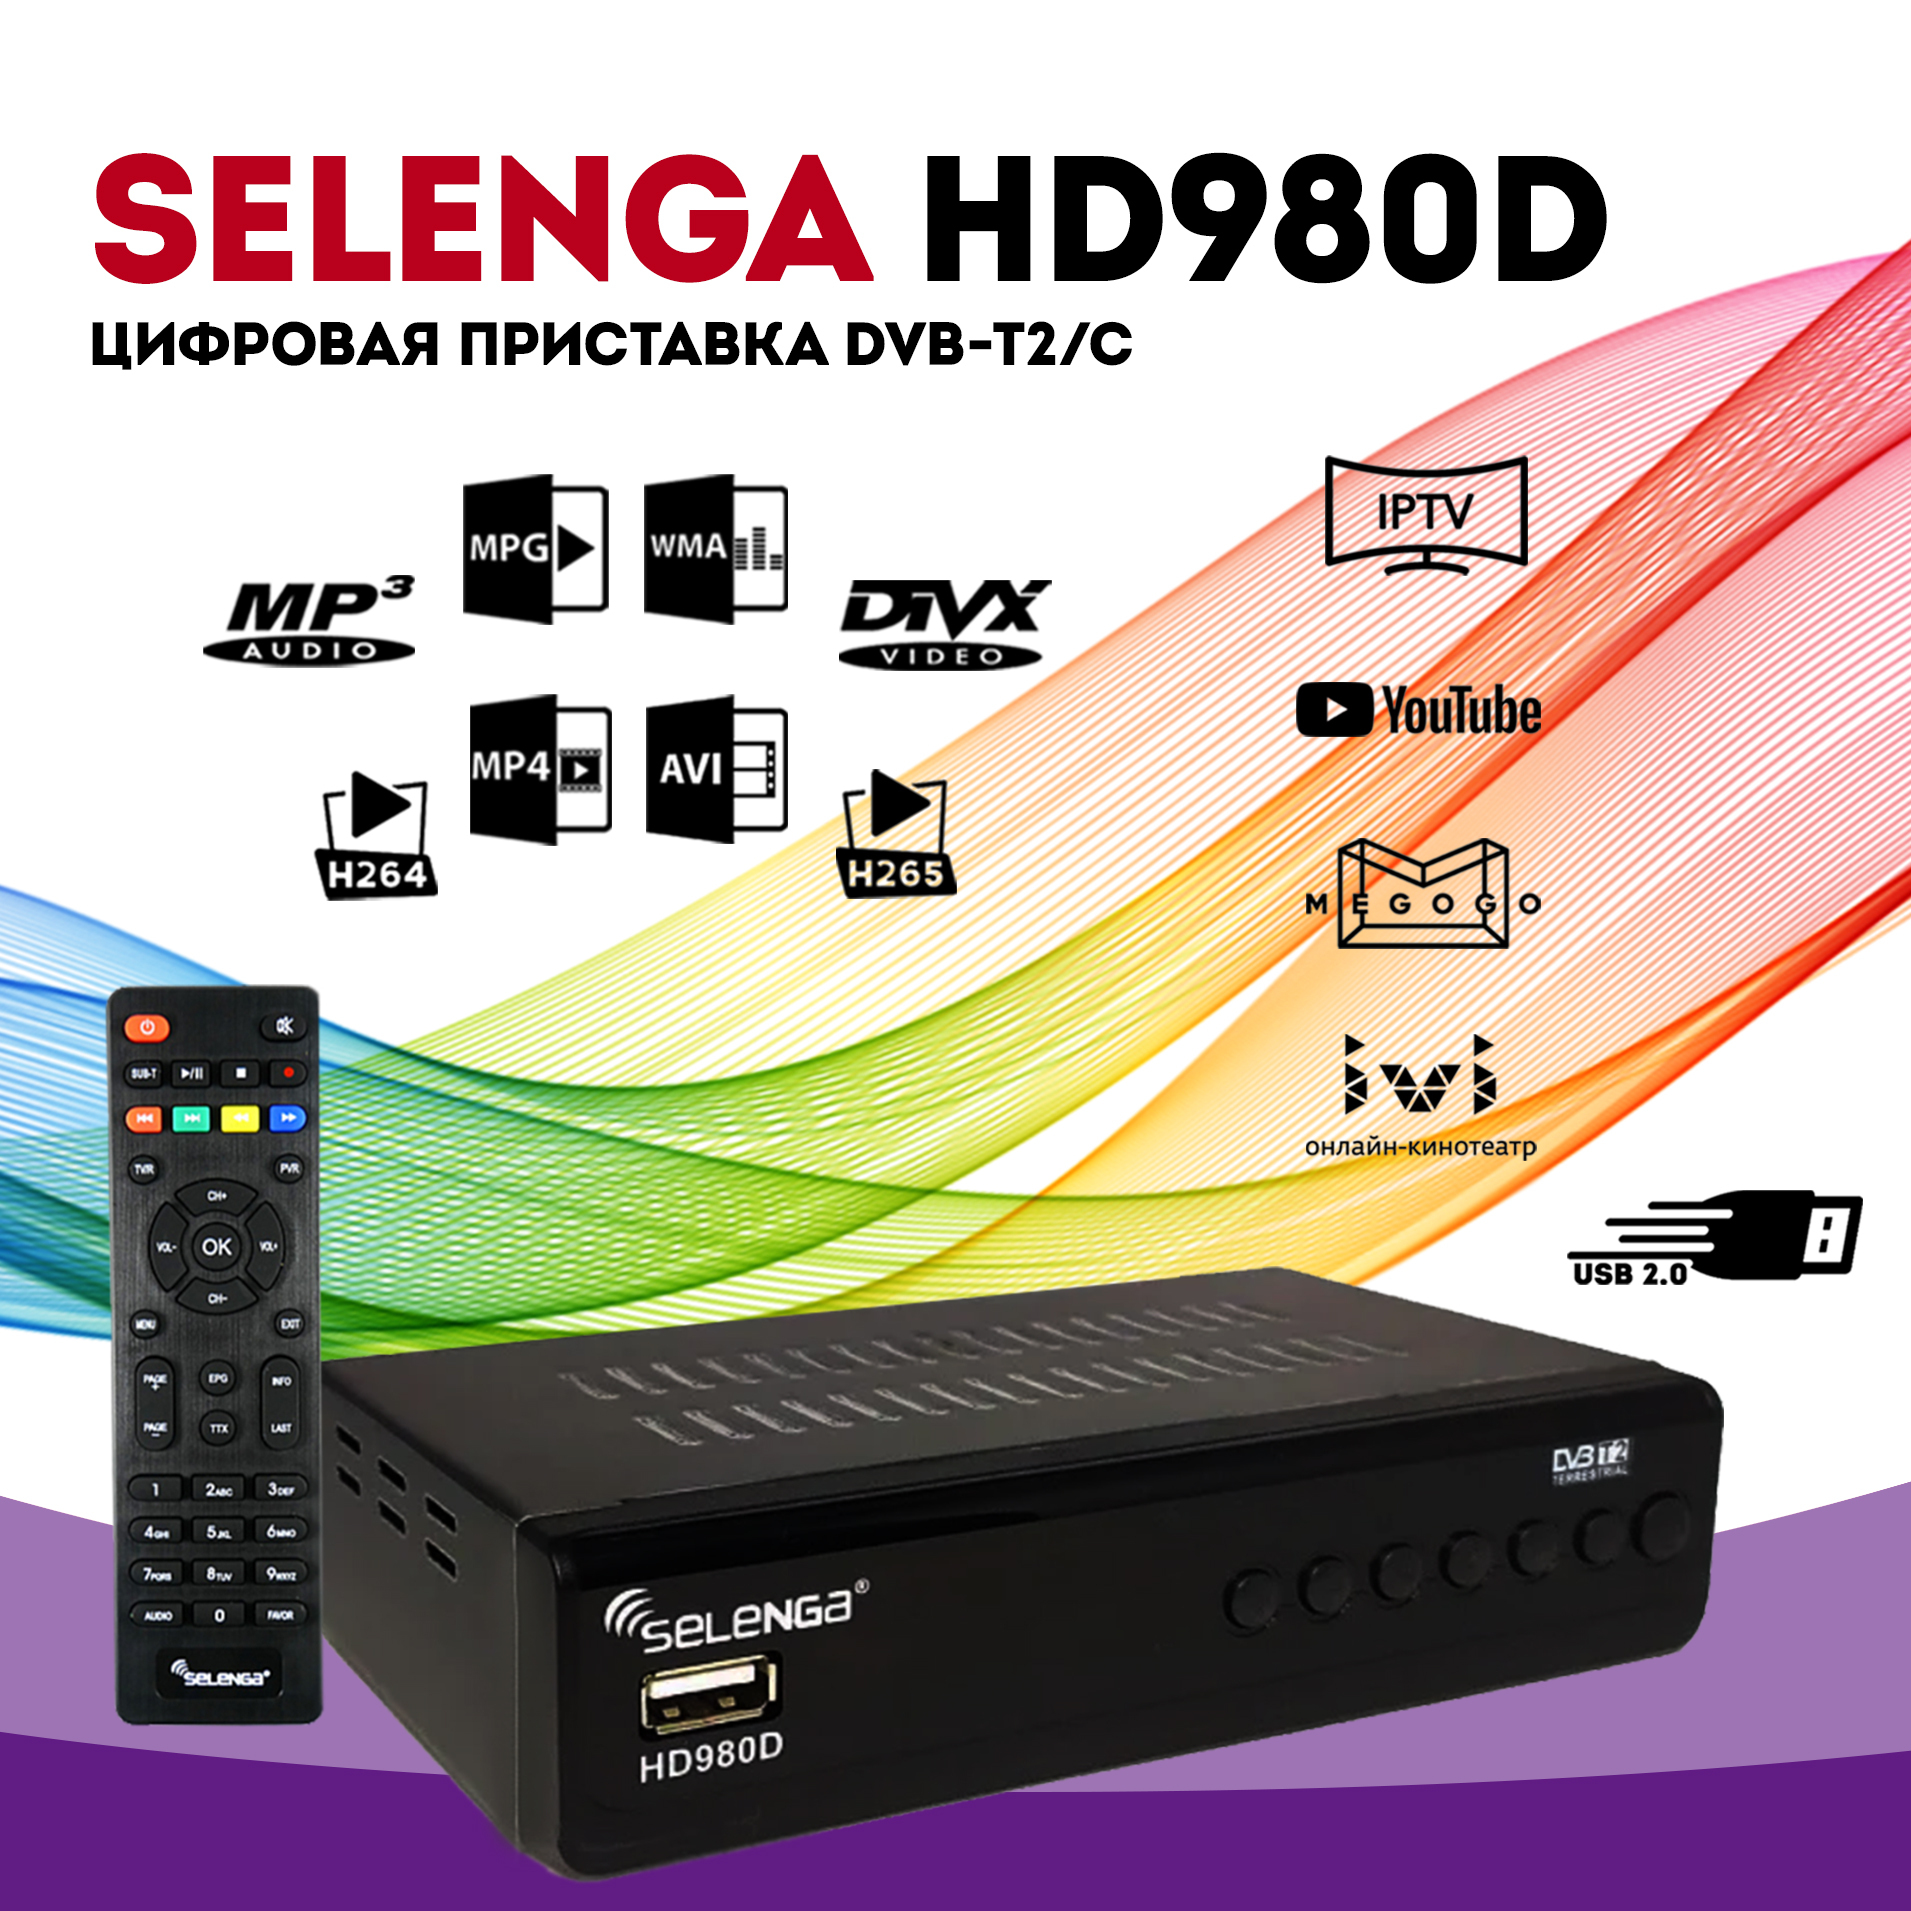 Селенга 980 HD